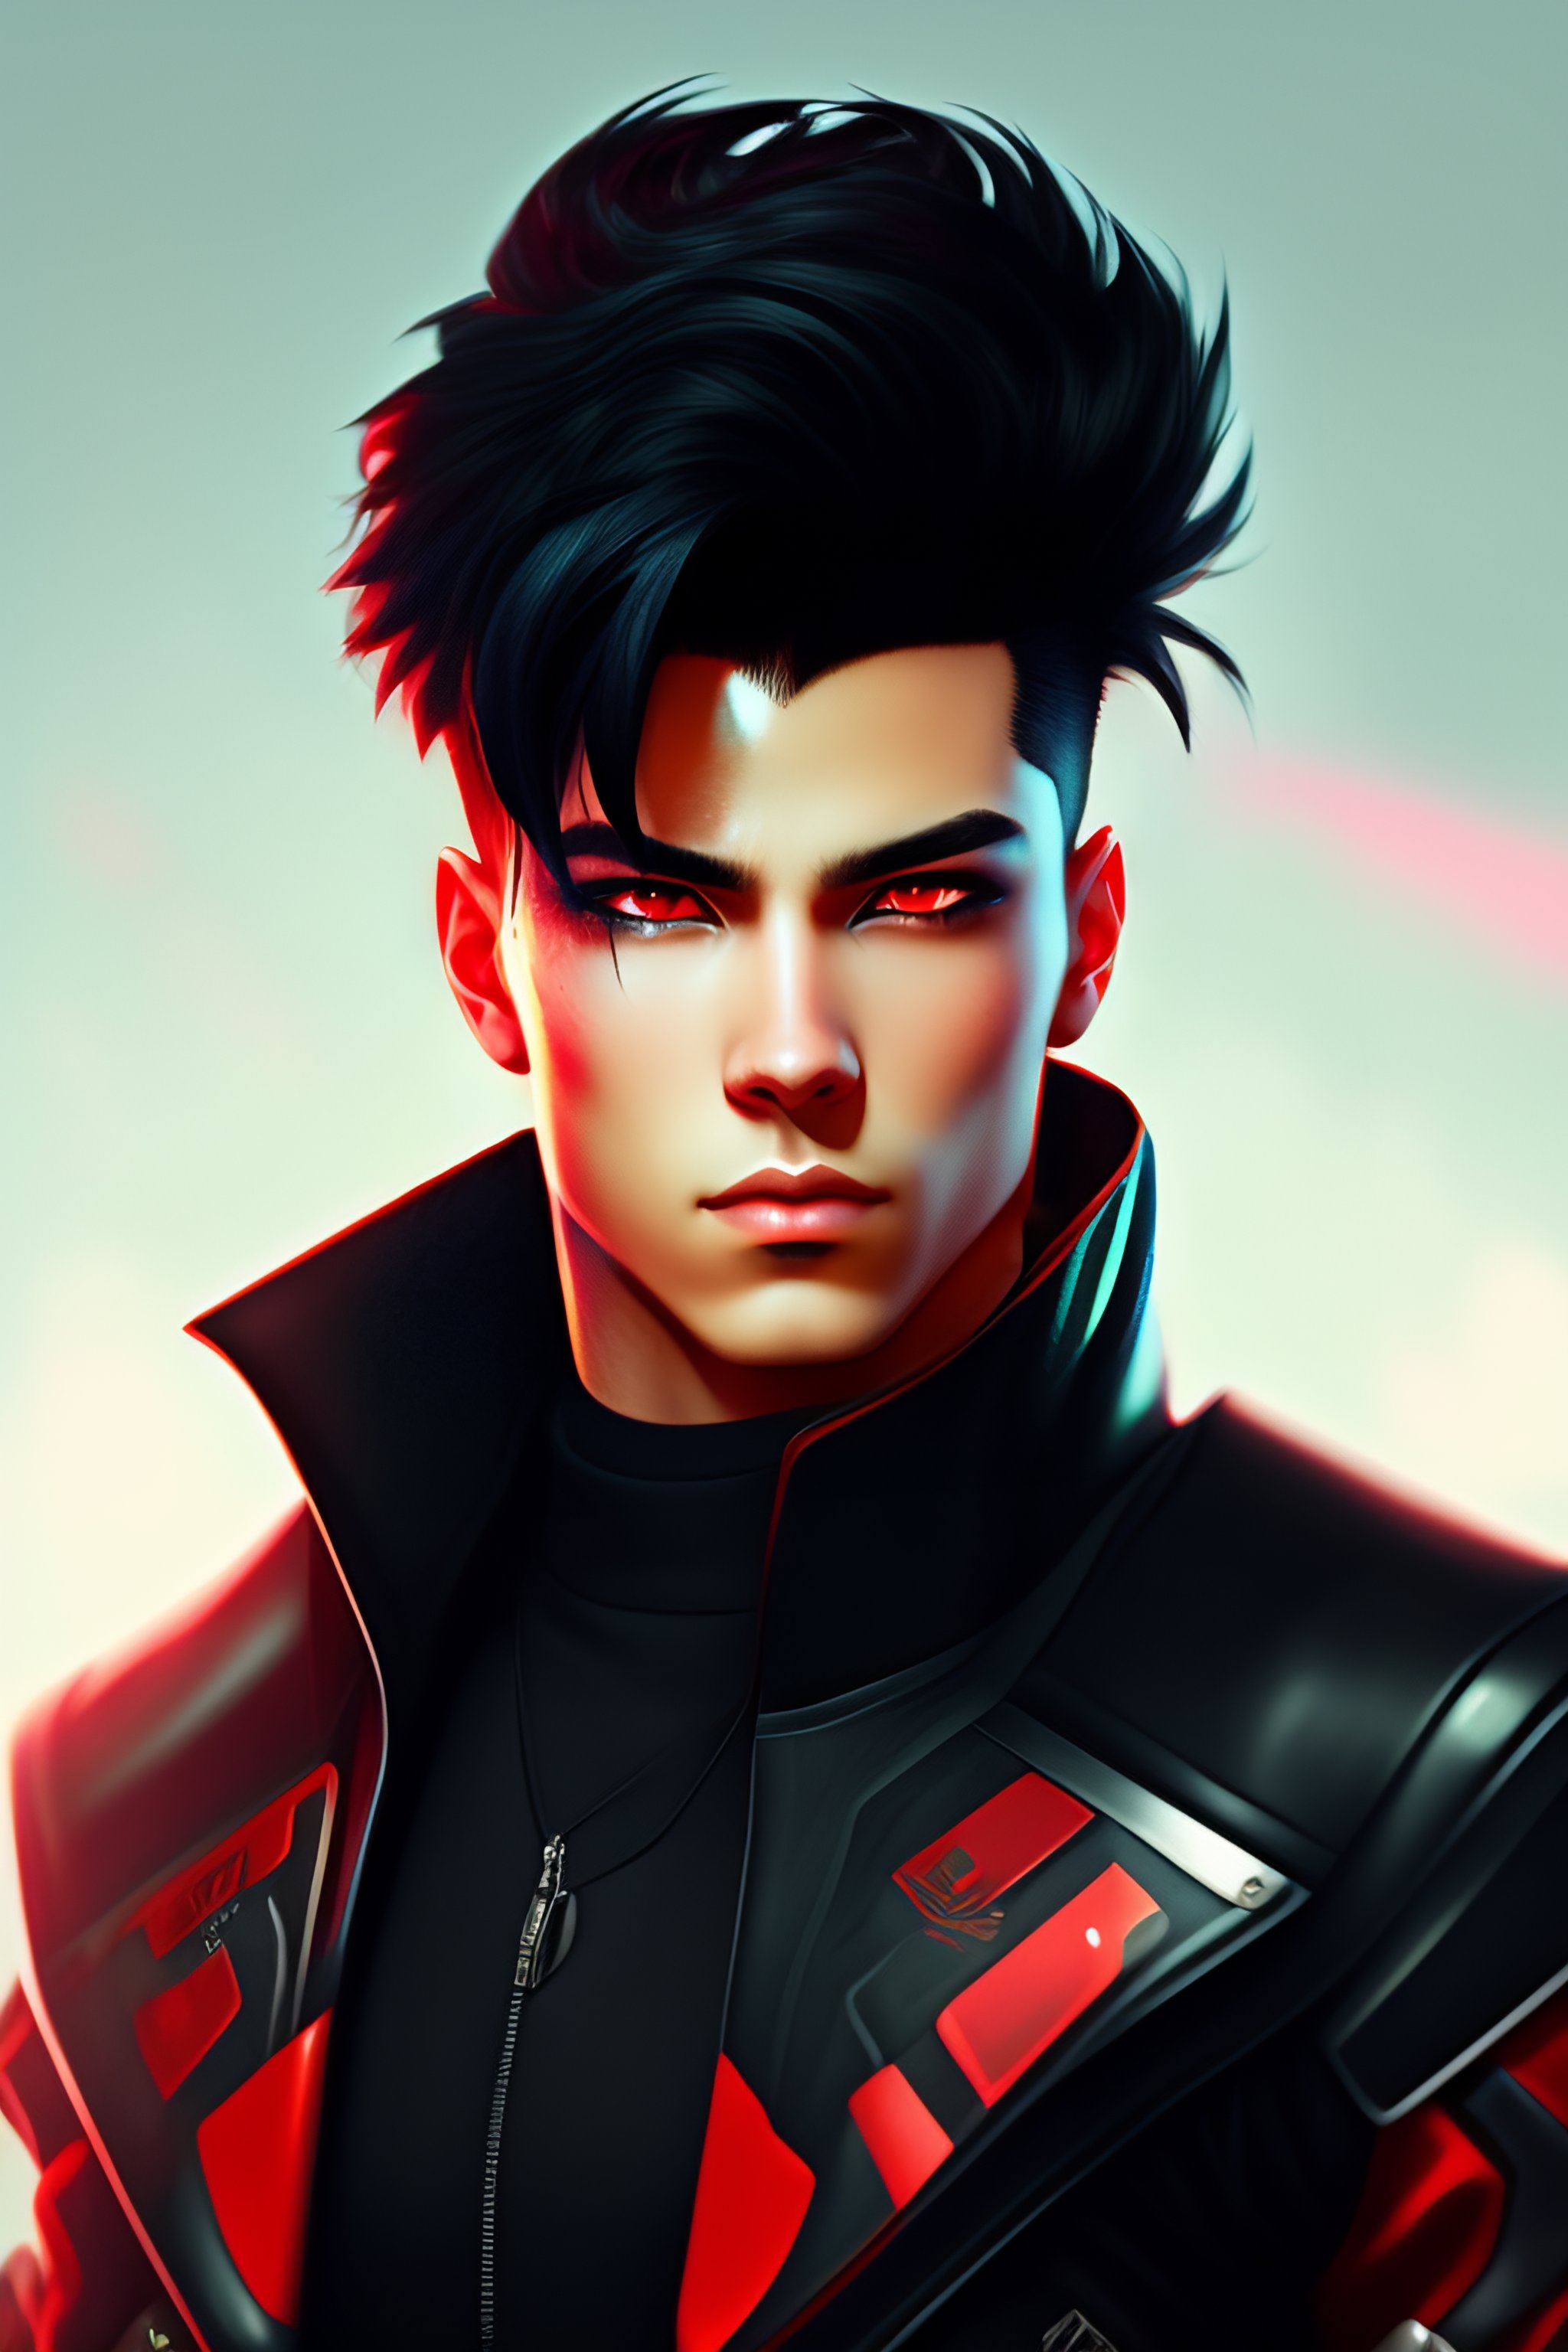 Lexica - Cyberpunk boy, pompadour, black hair, red eyes, highly detailed